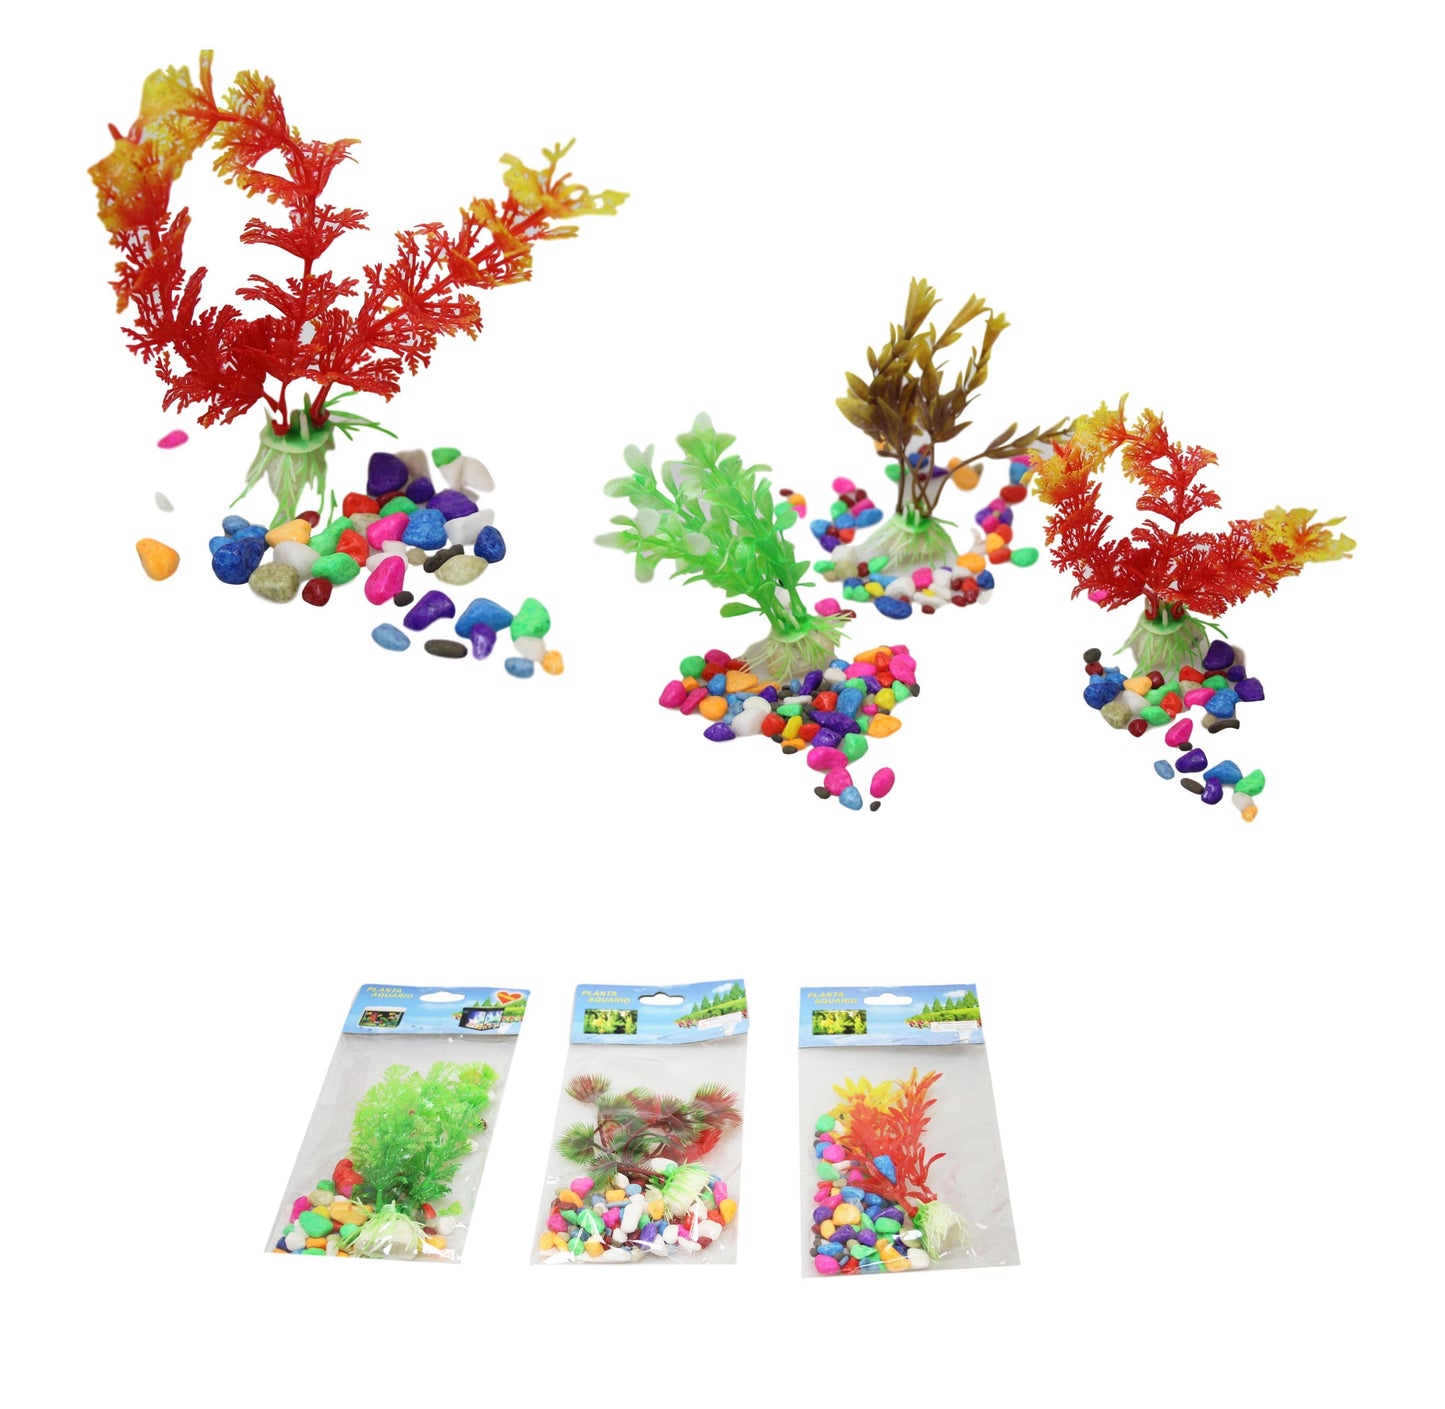 Artificial Fish Tank Plants Aquarium Aquatic Decoration Ornament Plant and Stones 5896 (Large Letter Rate)